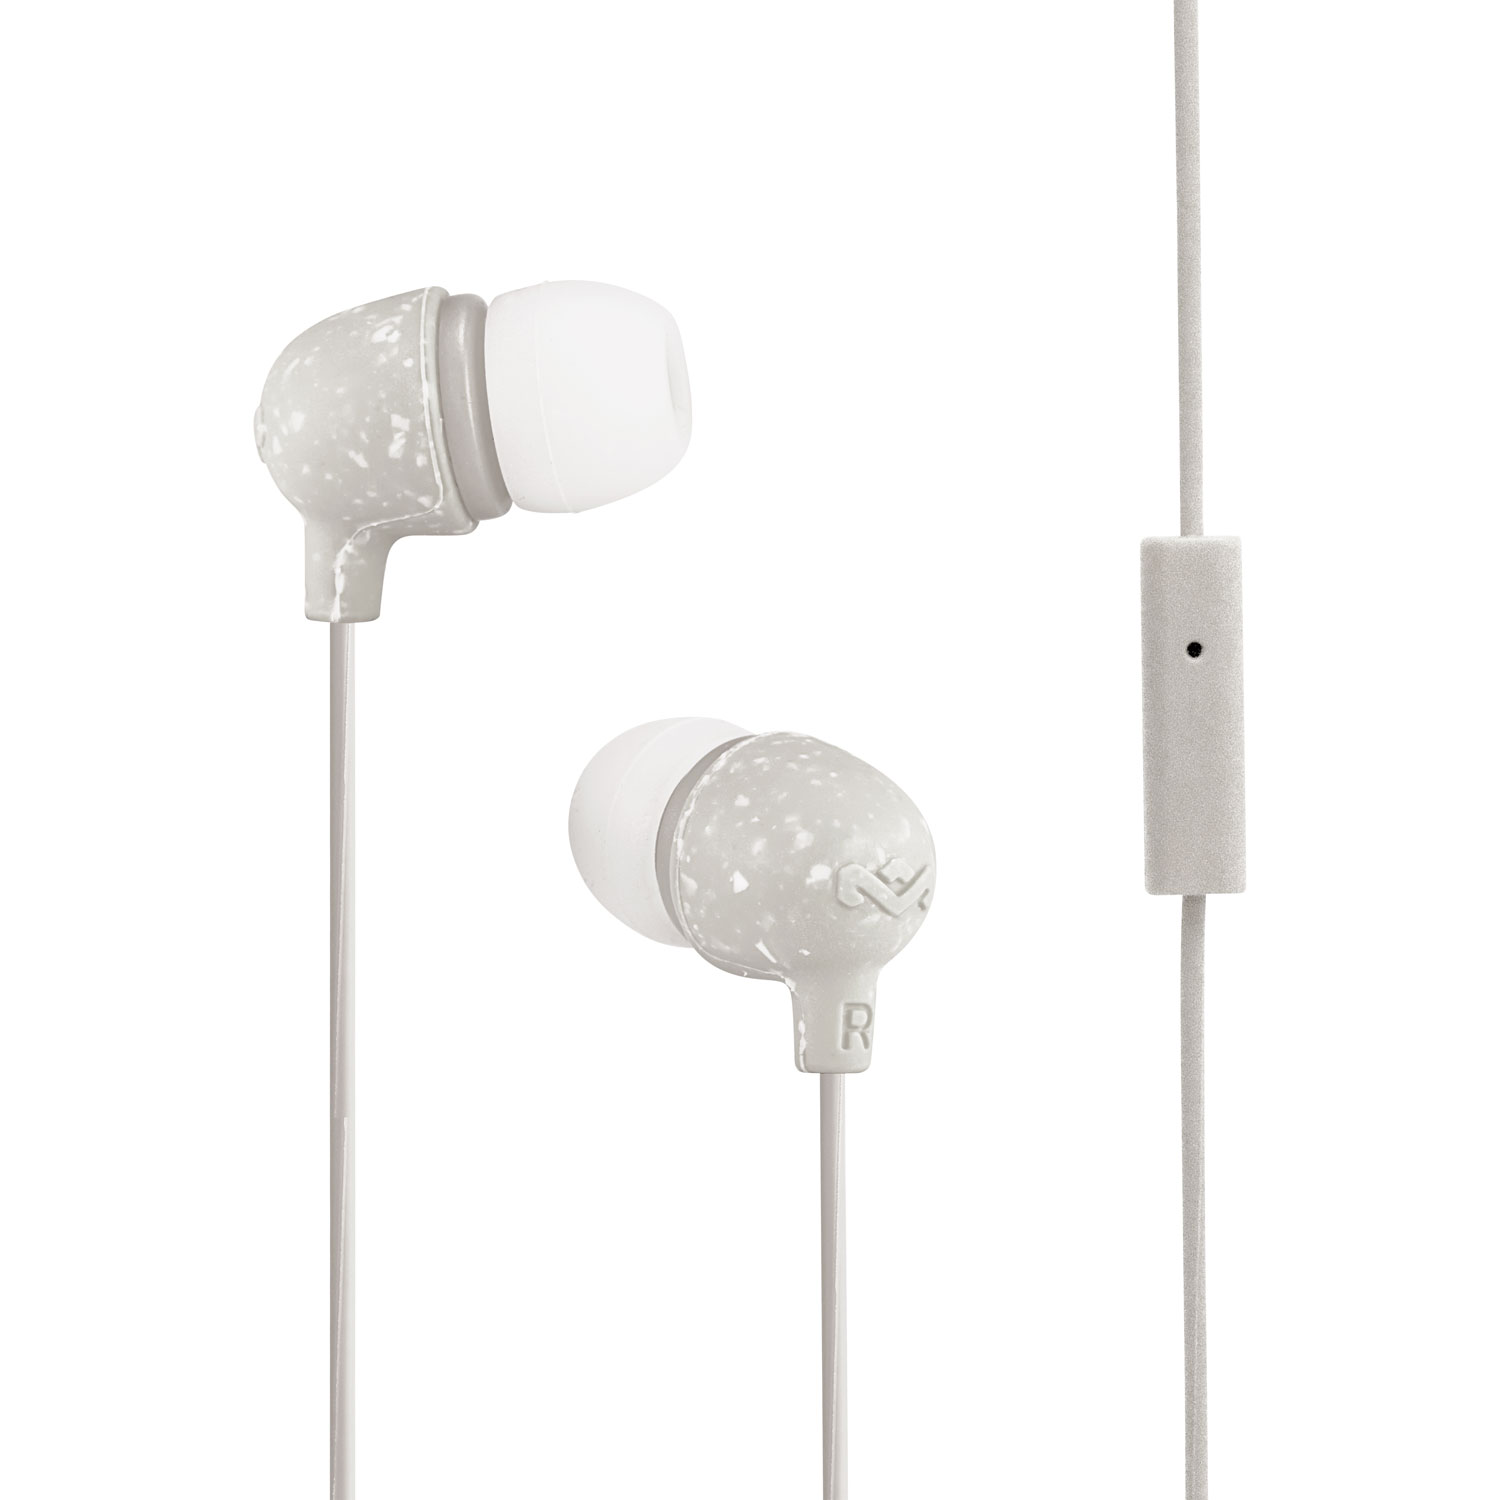 House of Marley Little Bird In-Ear Headphones - White